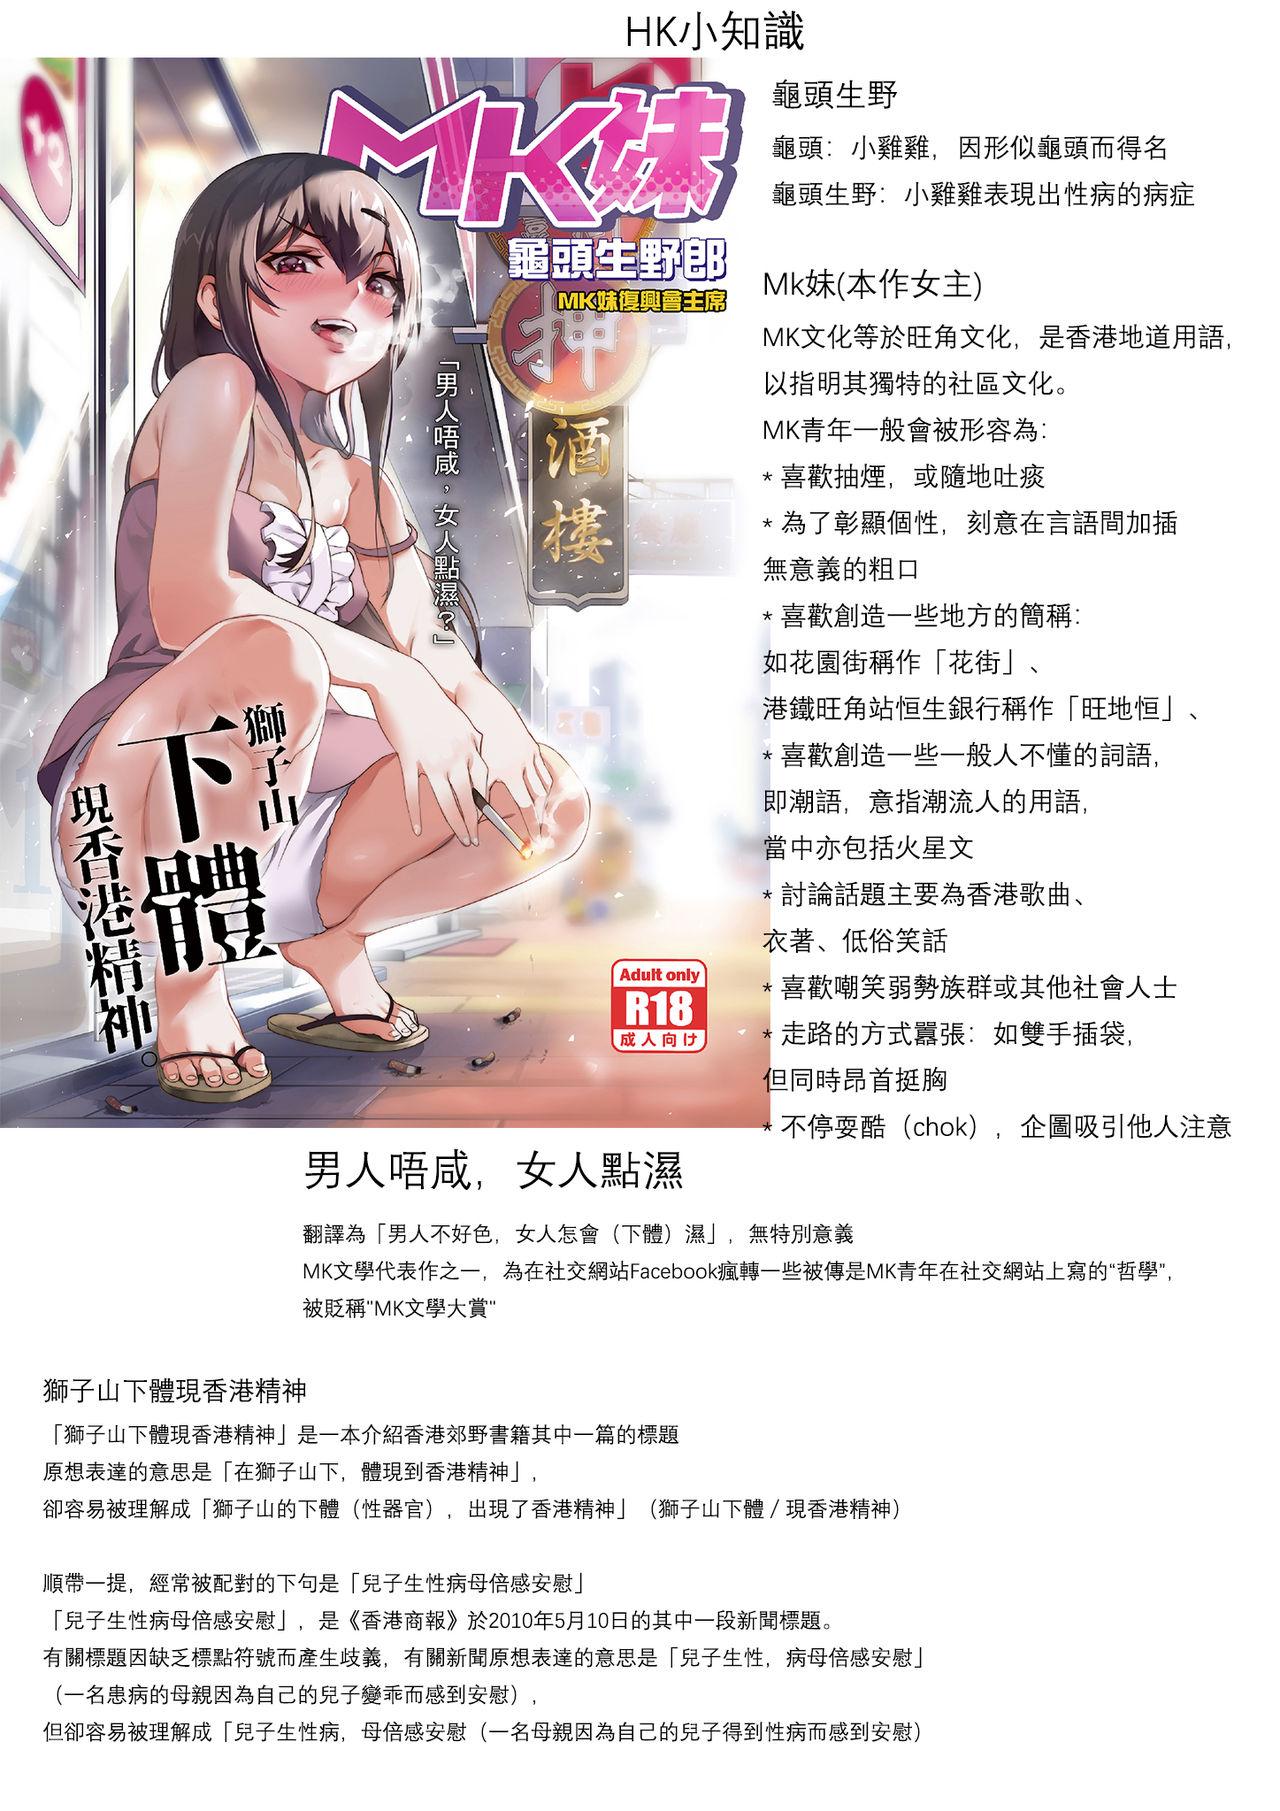 MK girl embodies the spirit of Hong Kong under the Lion Rock 2